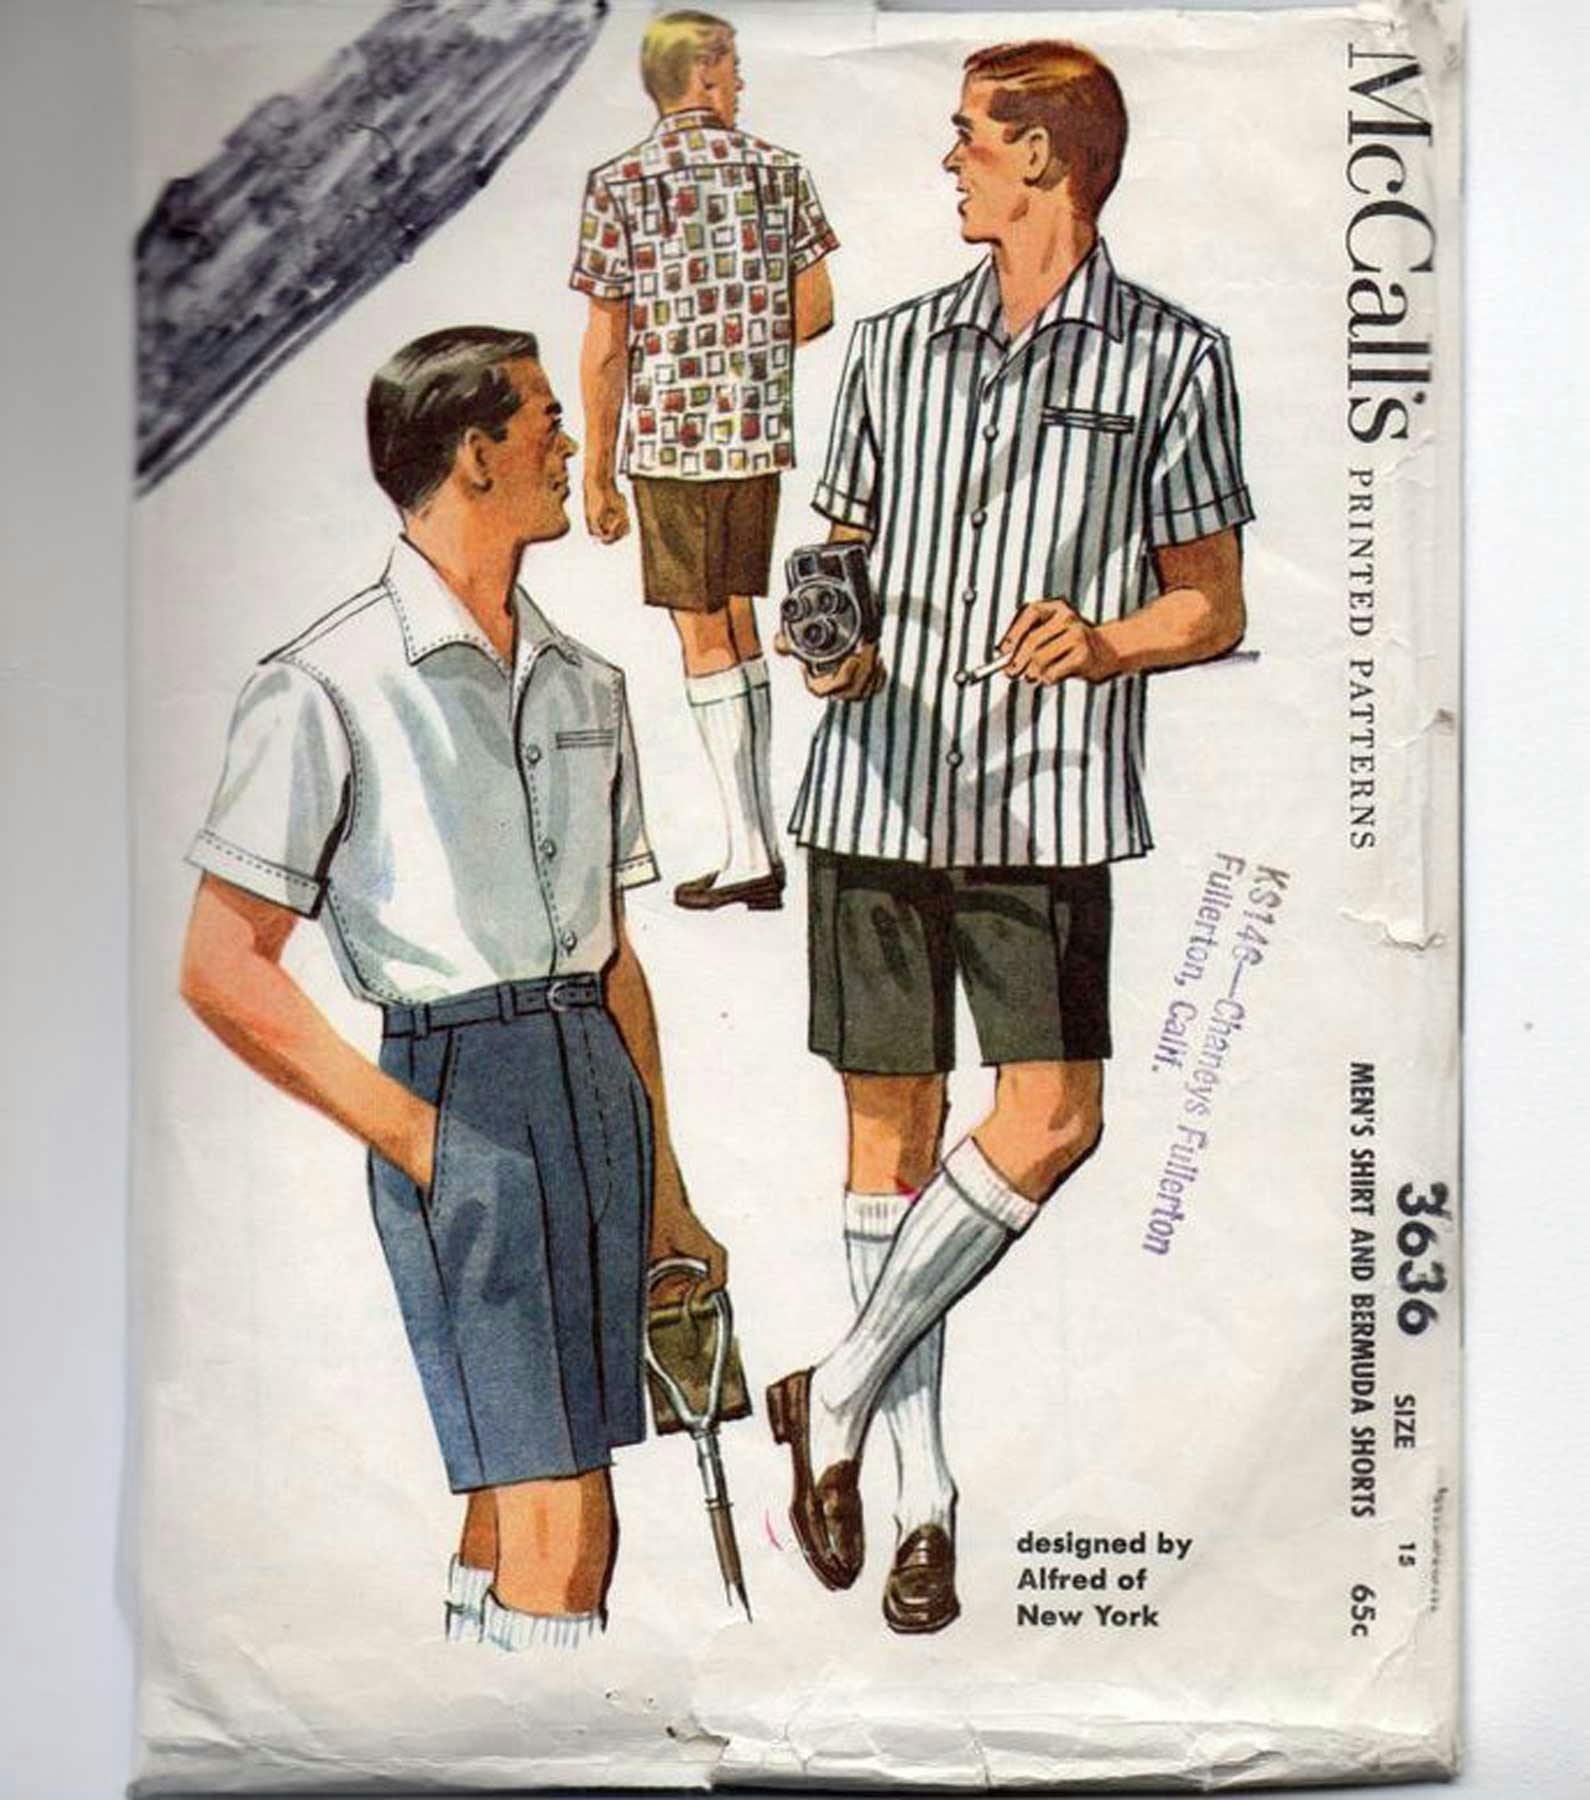 1950s-fashion-illustration-depicting-summer-casual-wear